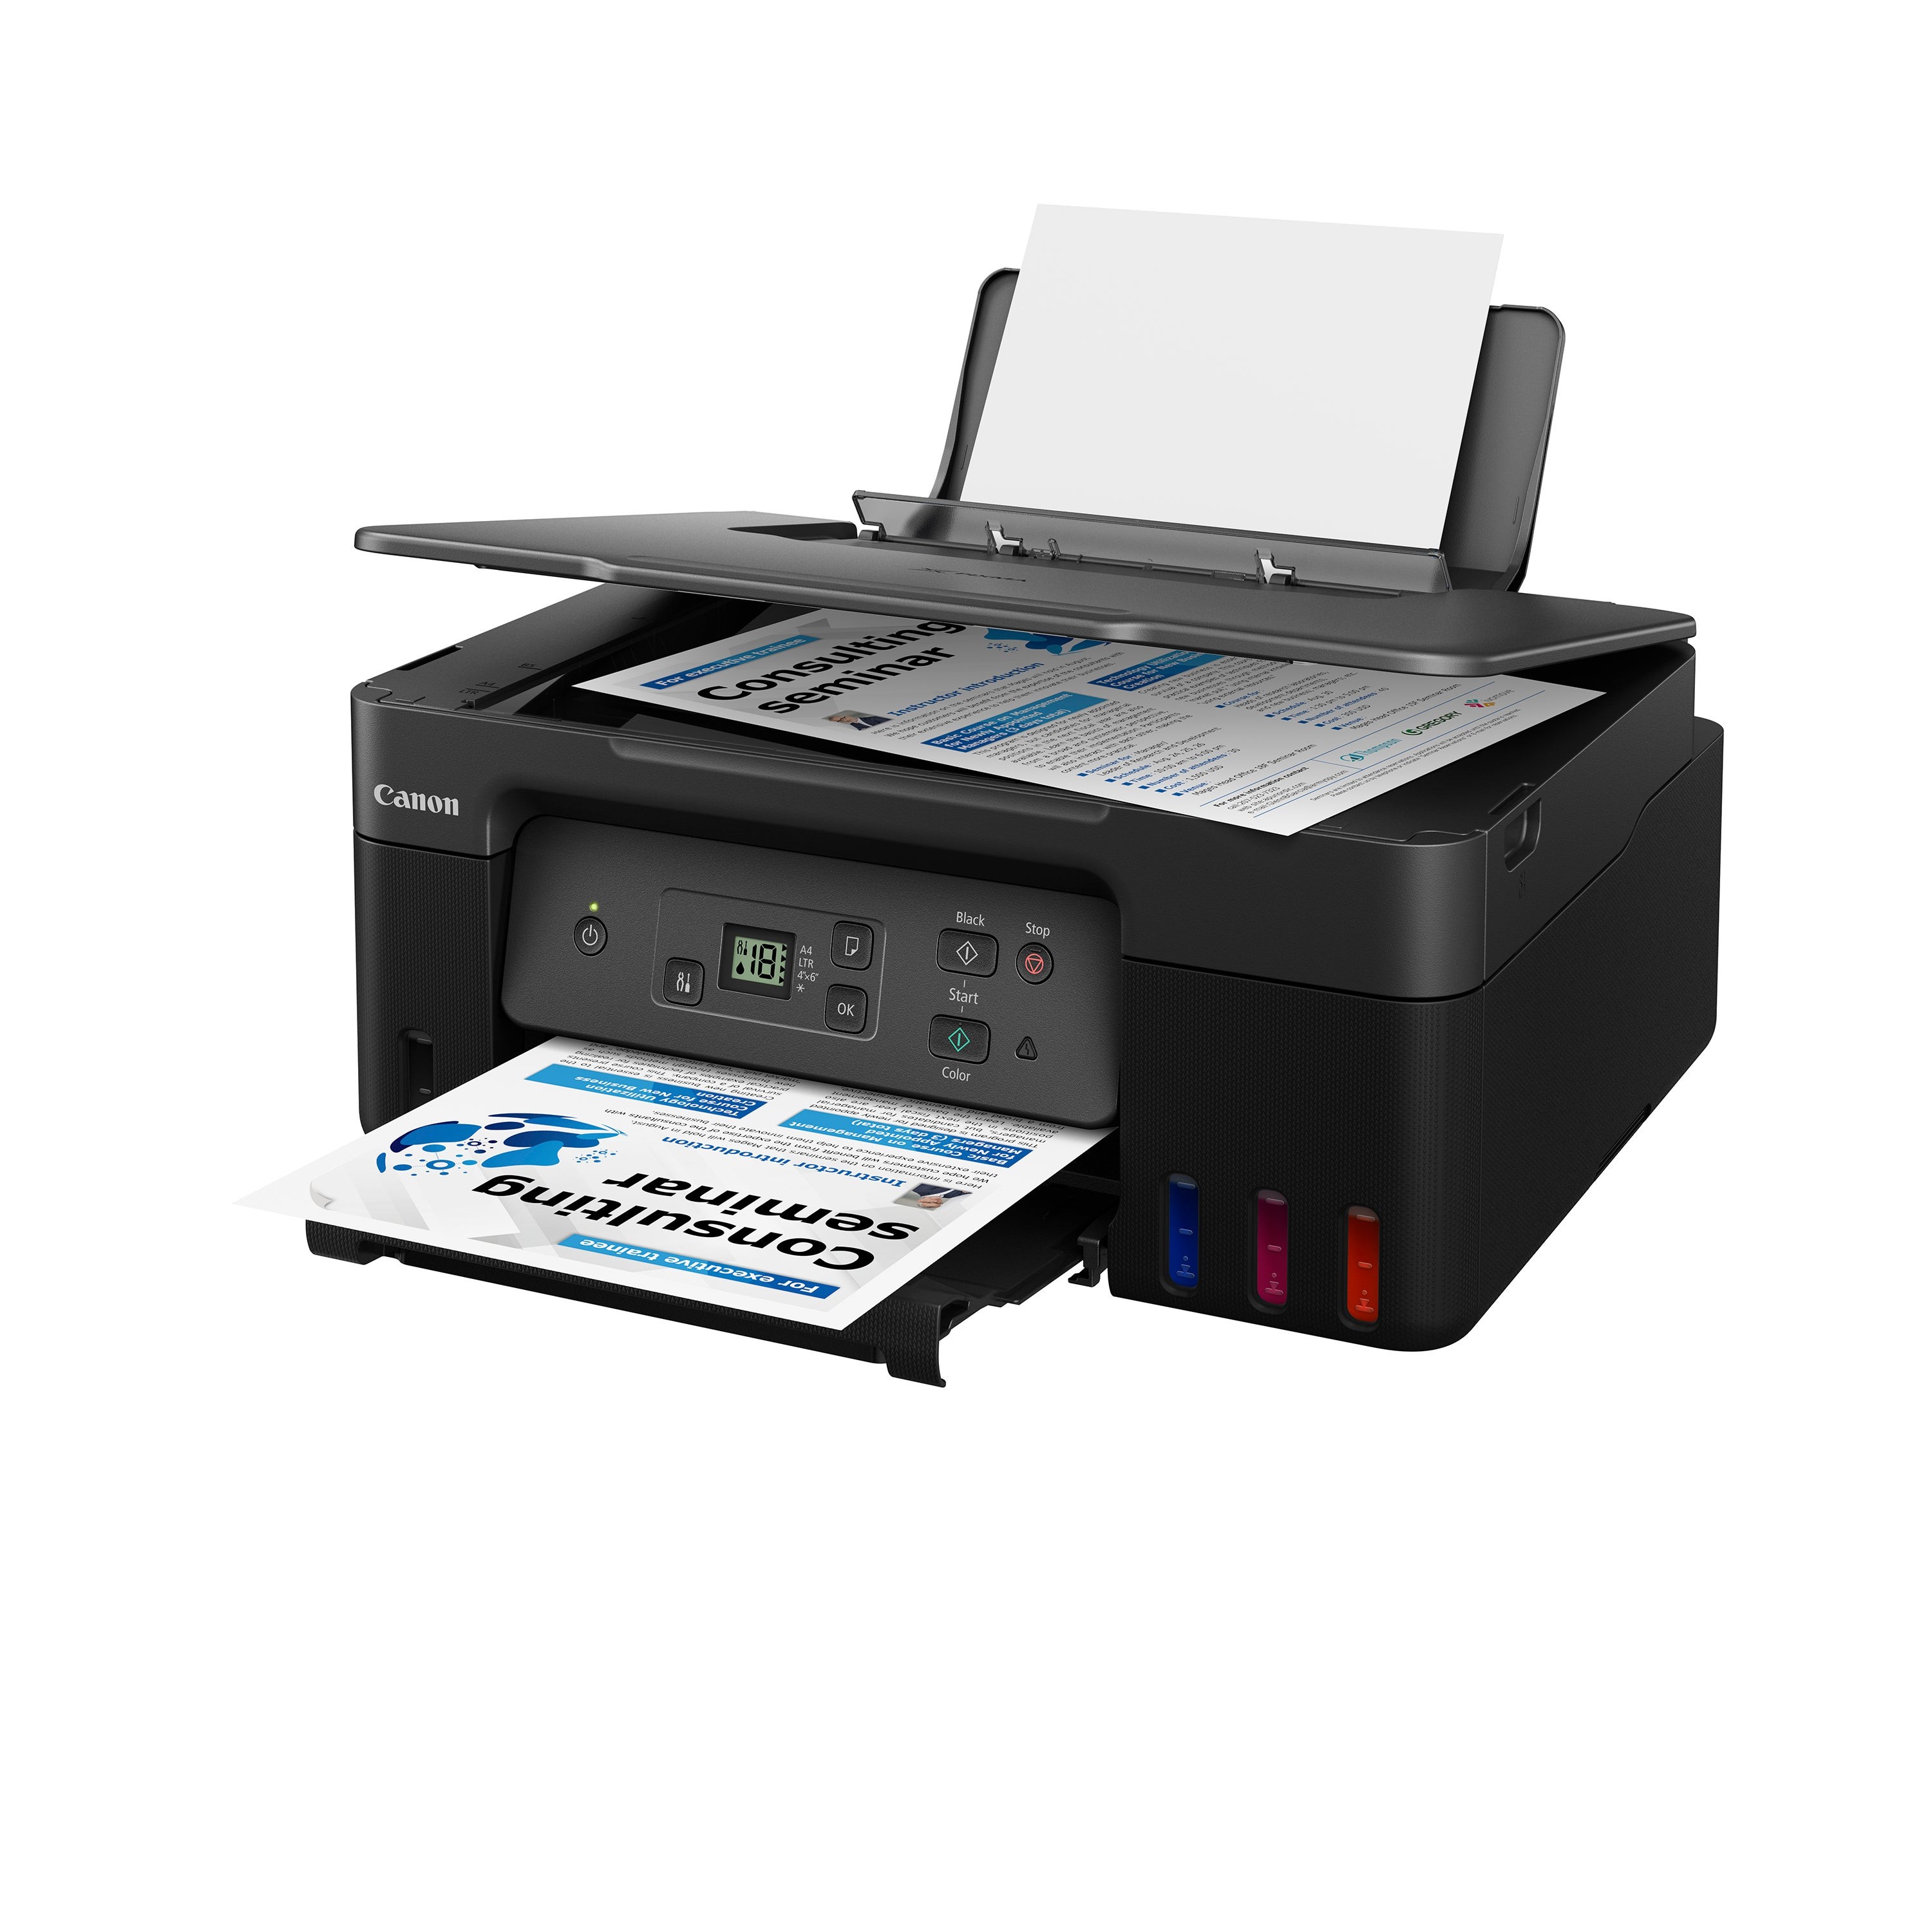 PIXMA G2270 MegaTank All-In-One Printer